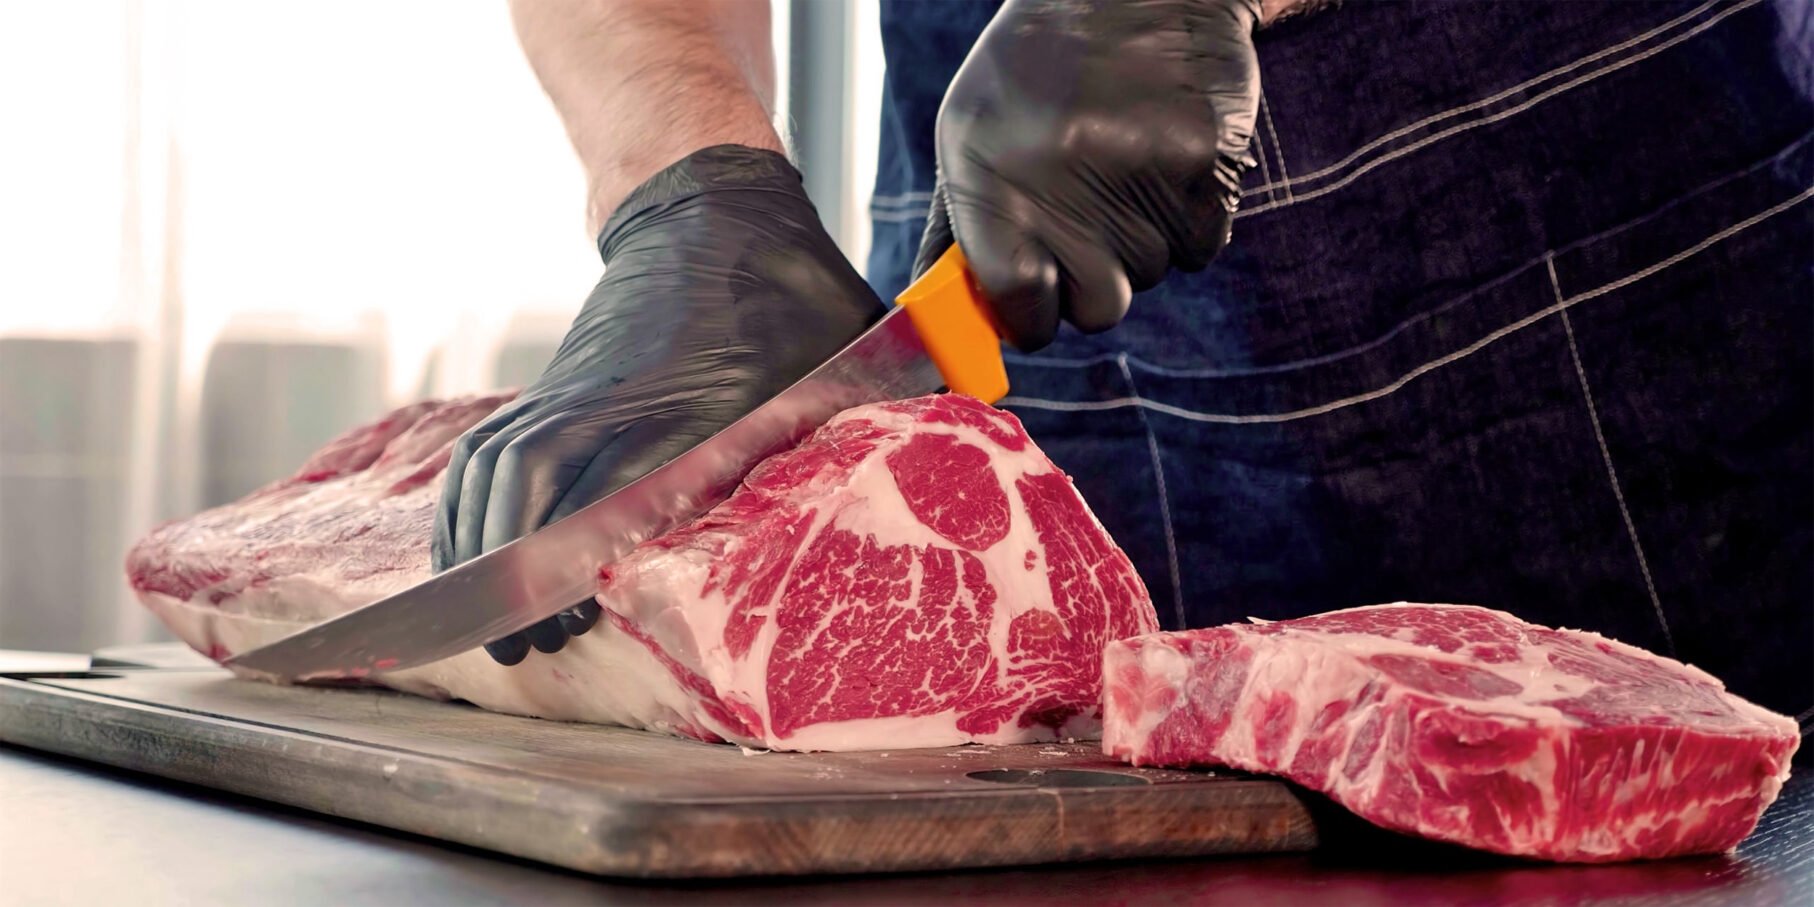 Food safe black prosenso gloves cutting ribeye steak